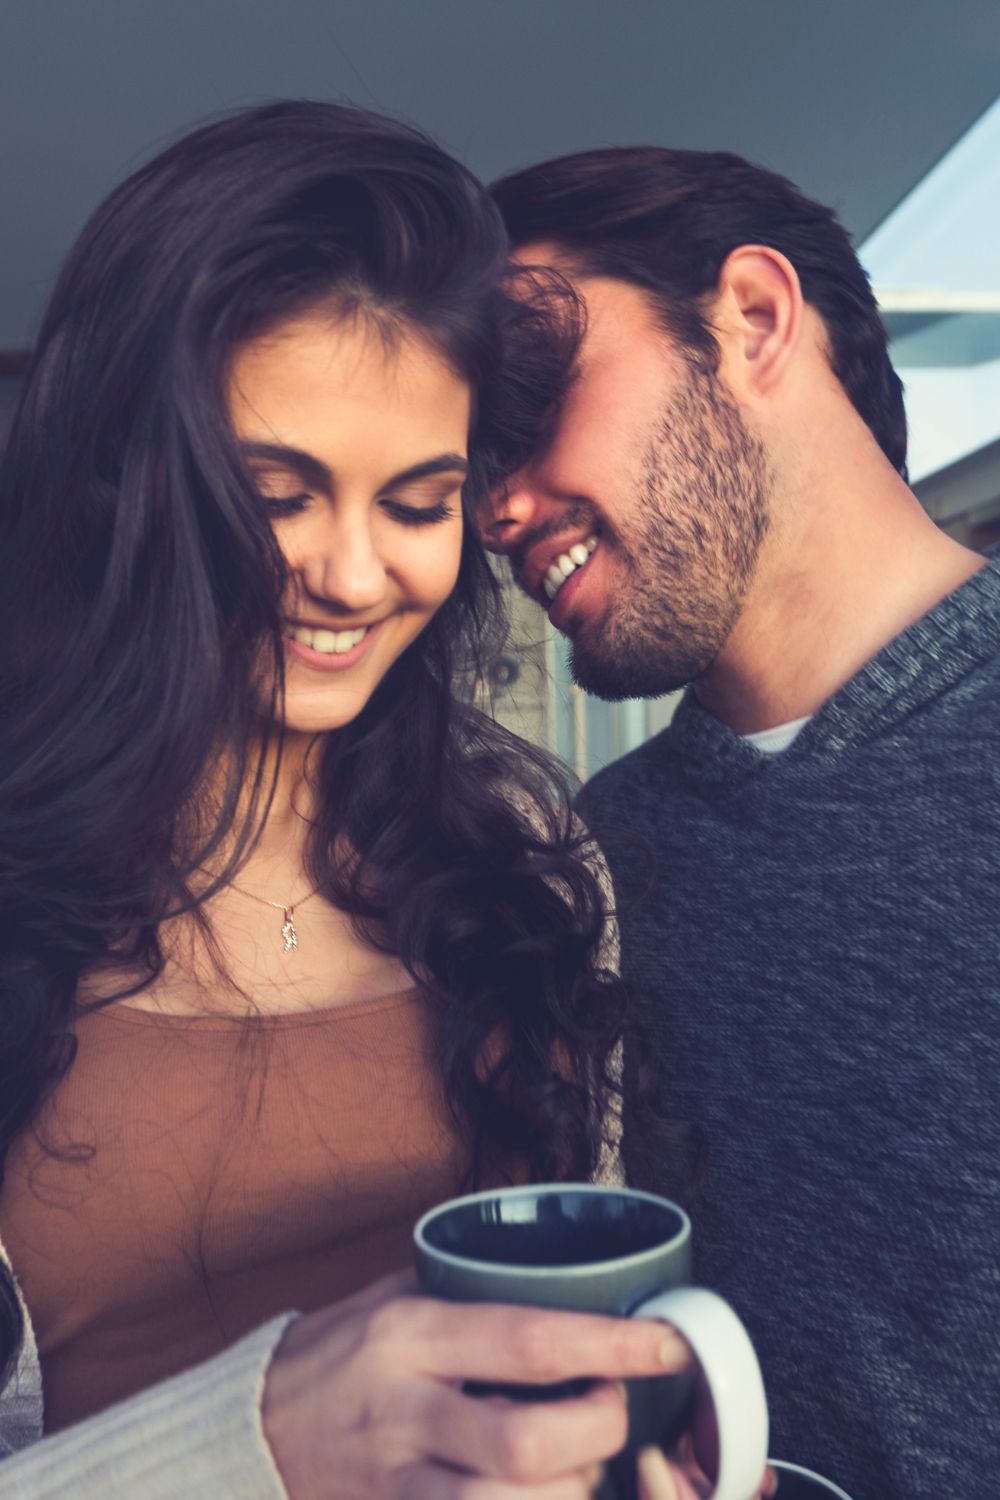 Can Extramarital Affairs Be True Love?